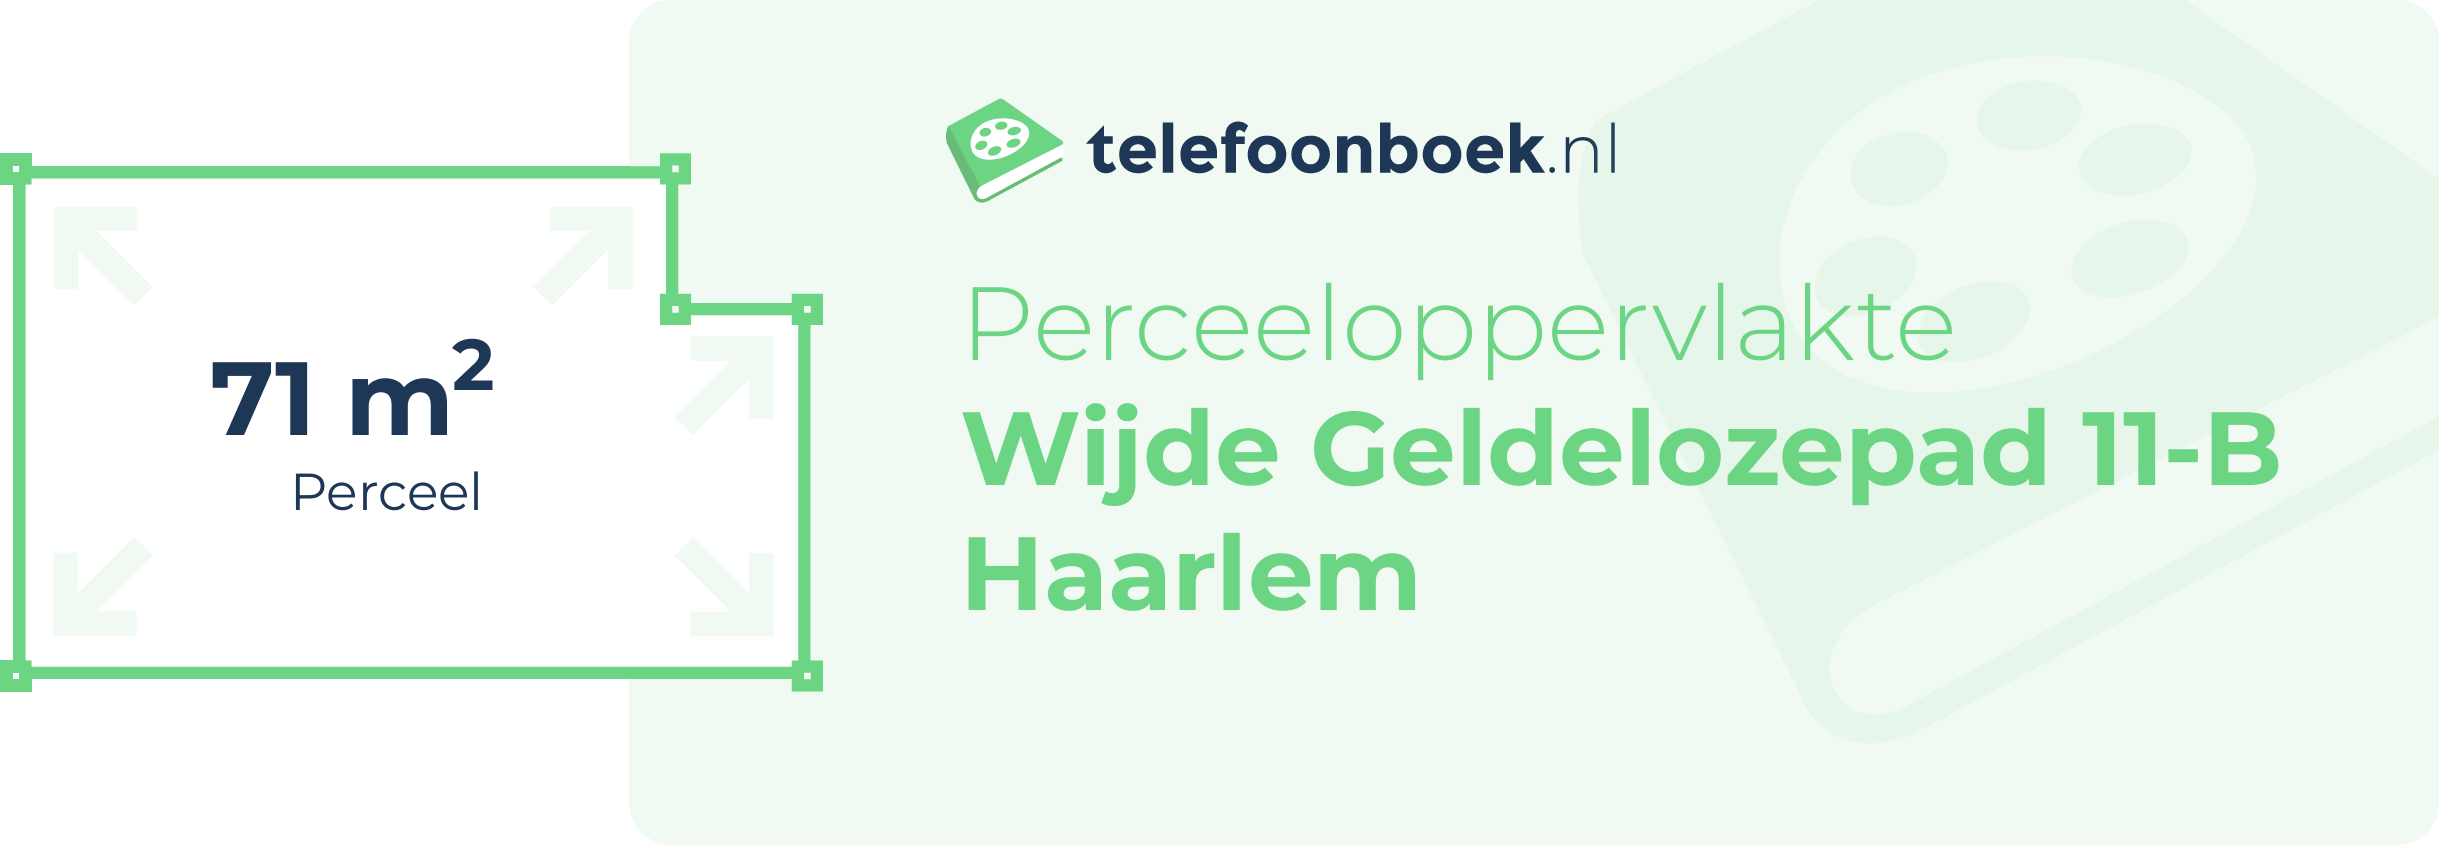 Perceeloppervlakte Wijde Geldelozepad 11-B Haarlem